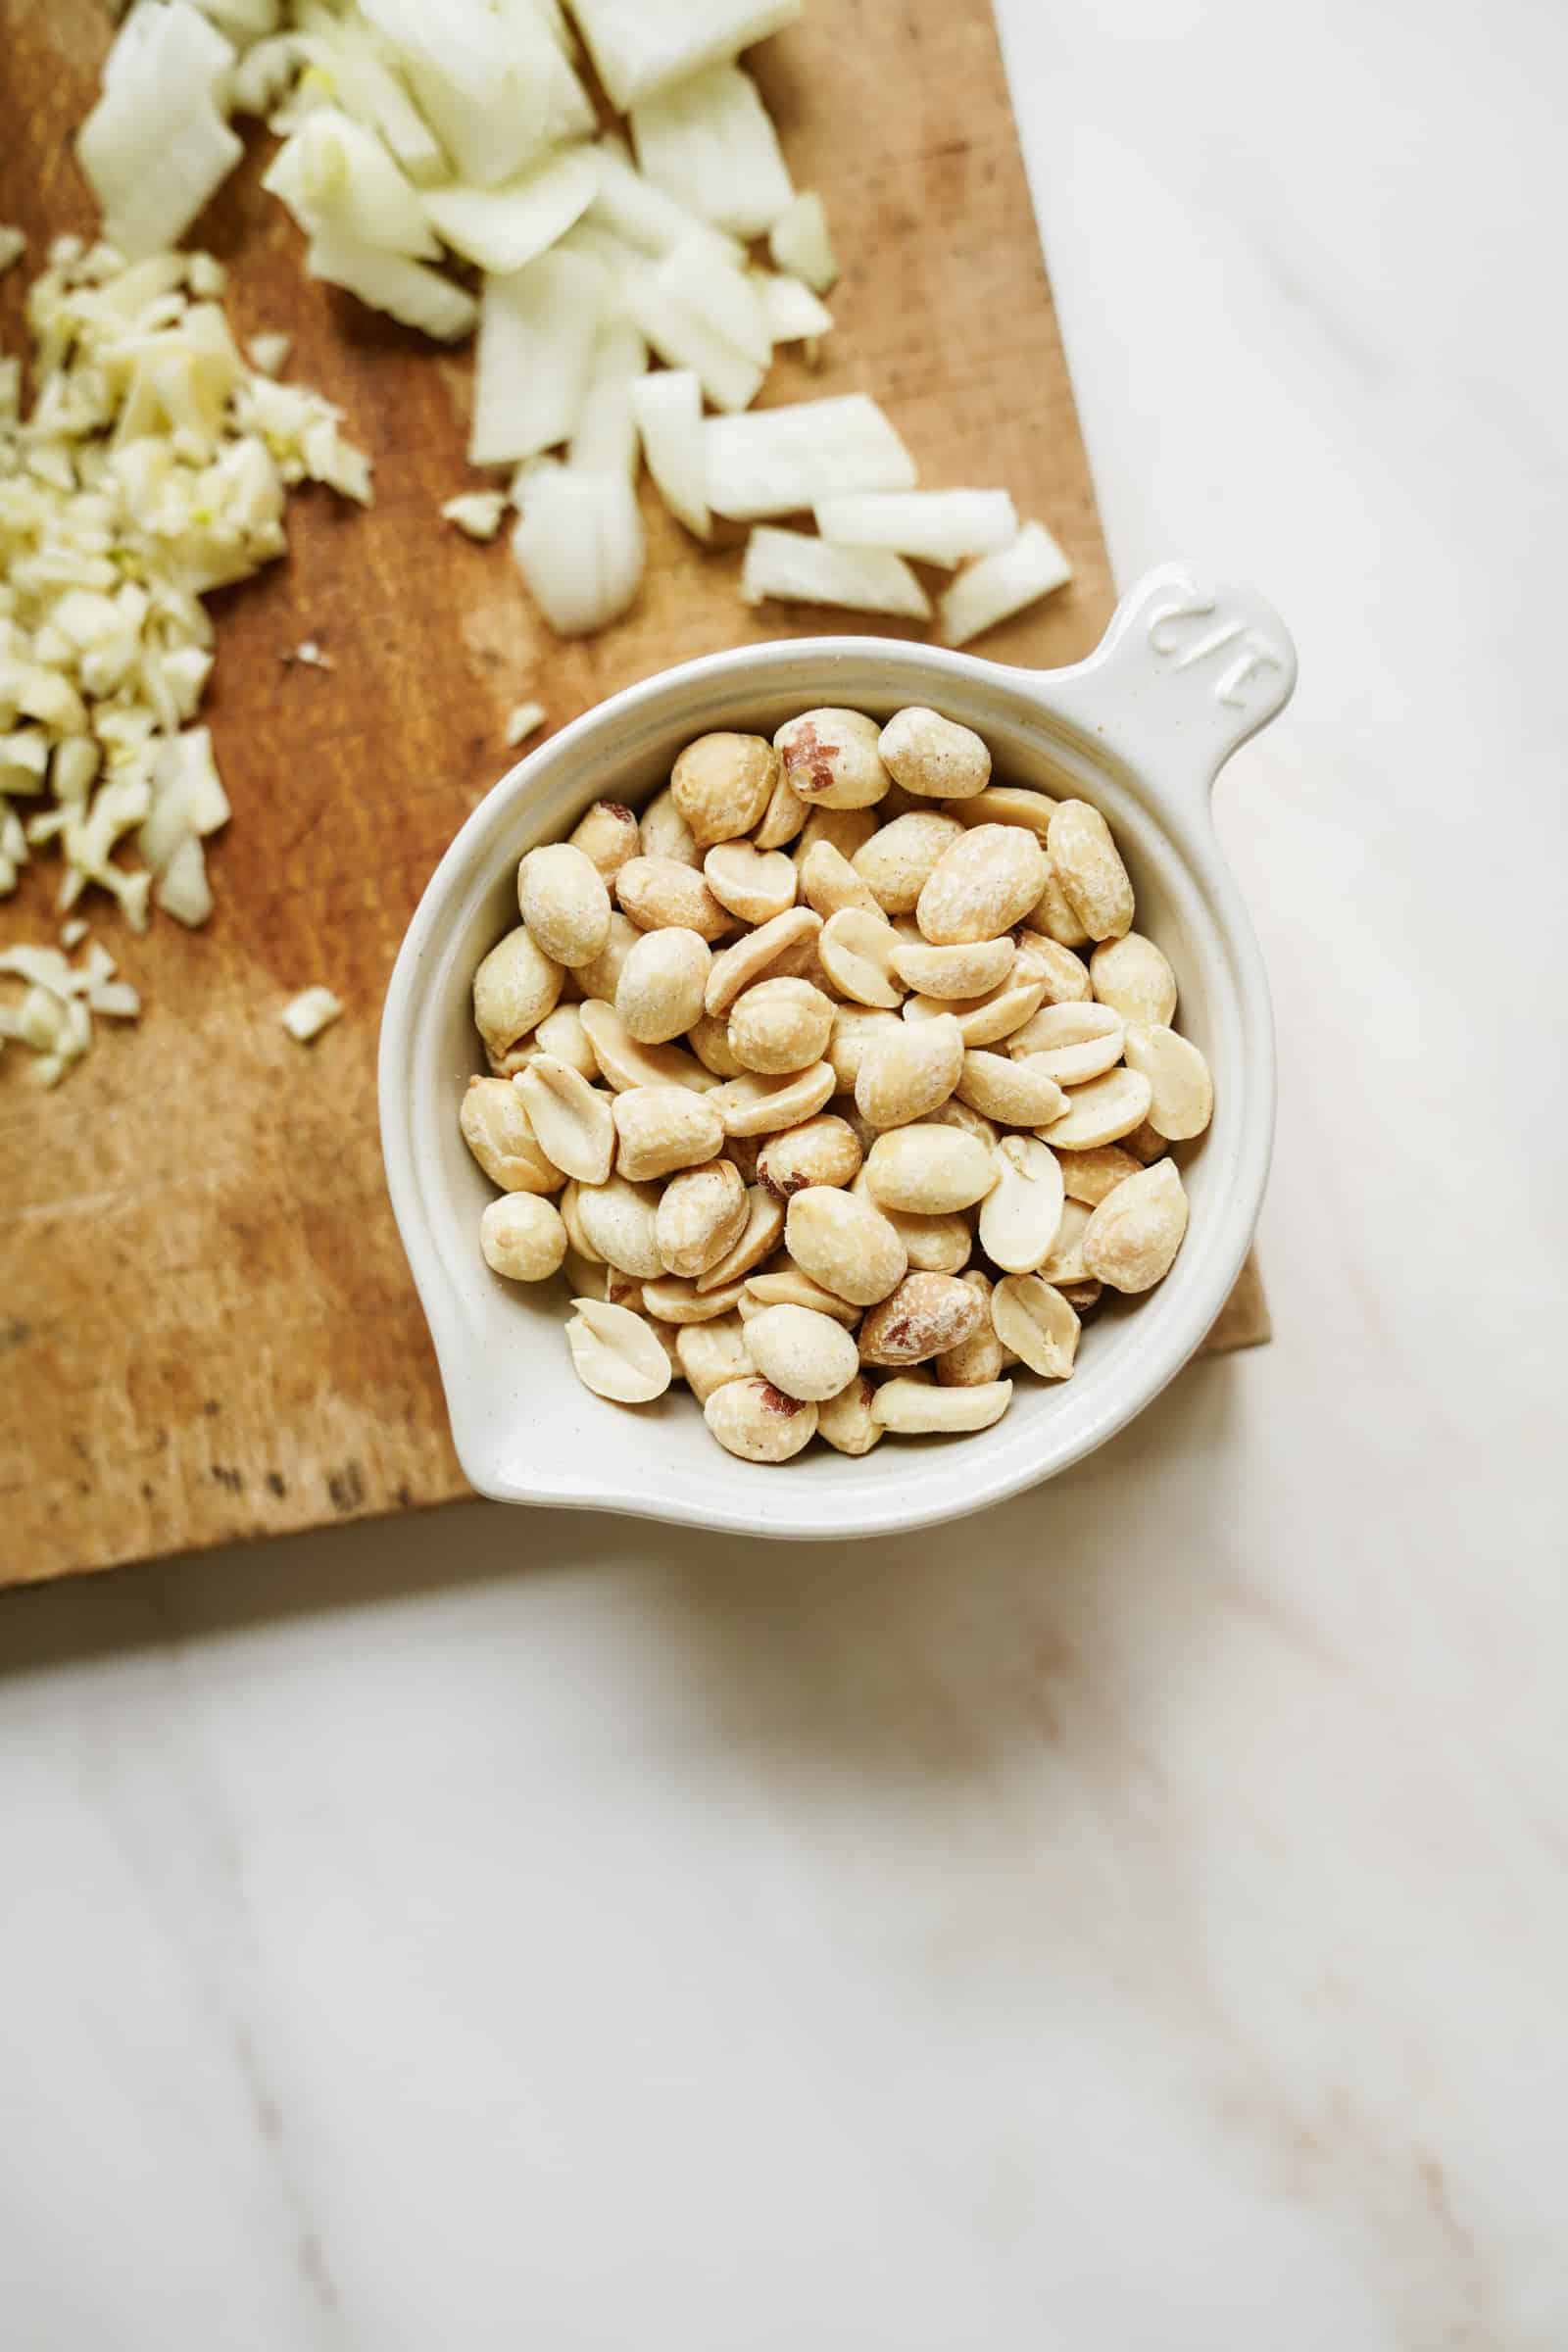 Peanuts for lentil meatballs in a bowl